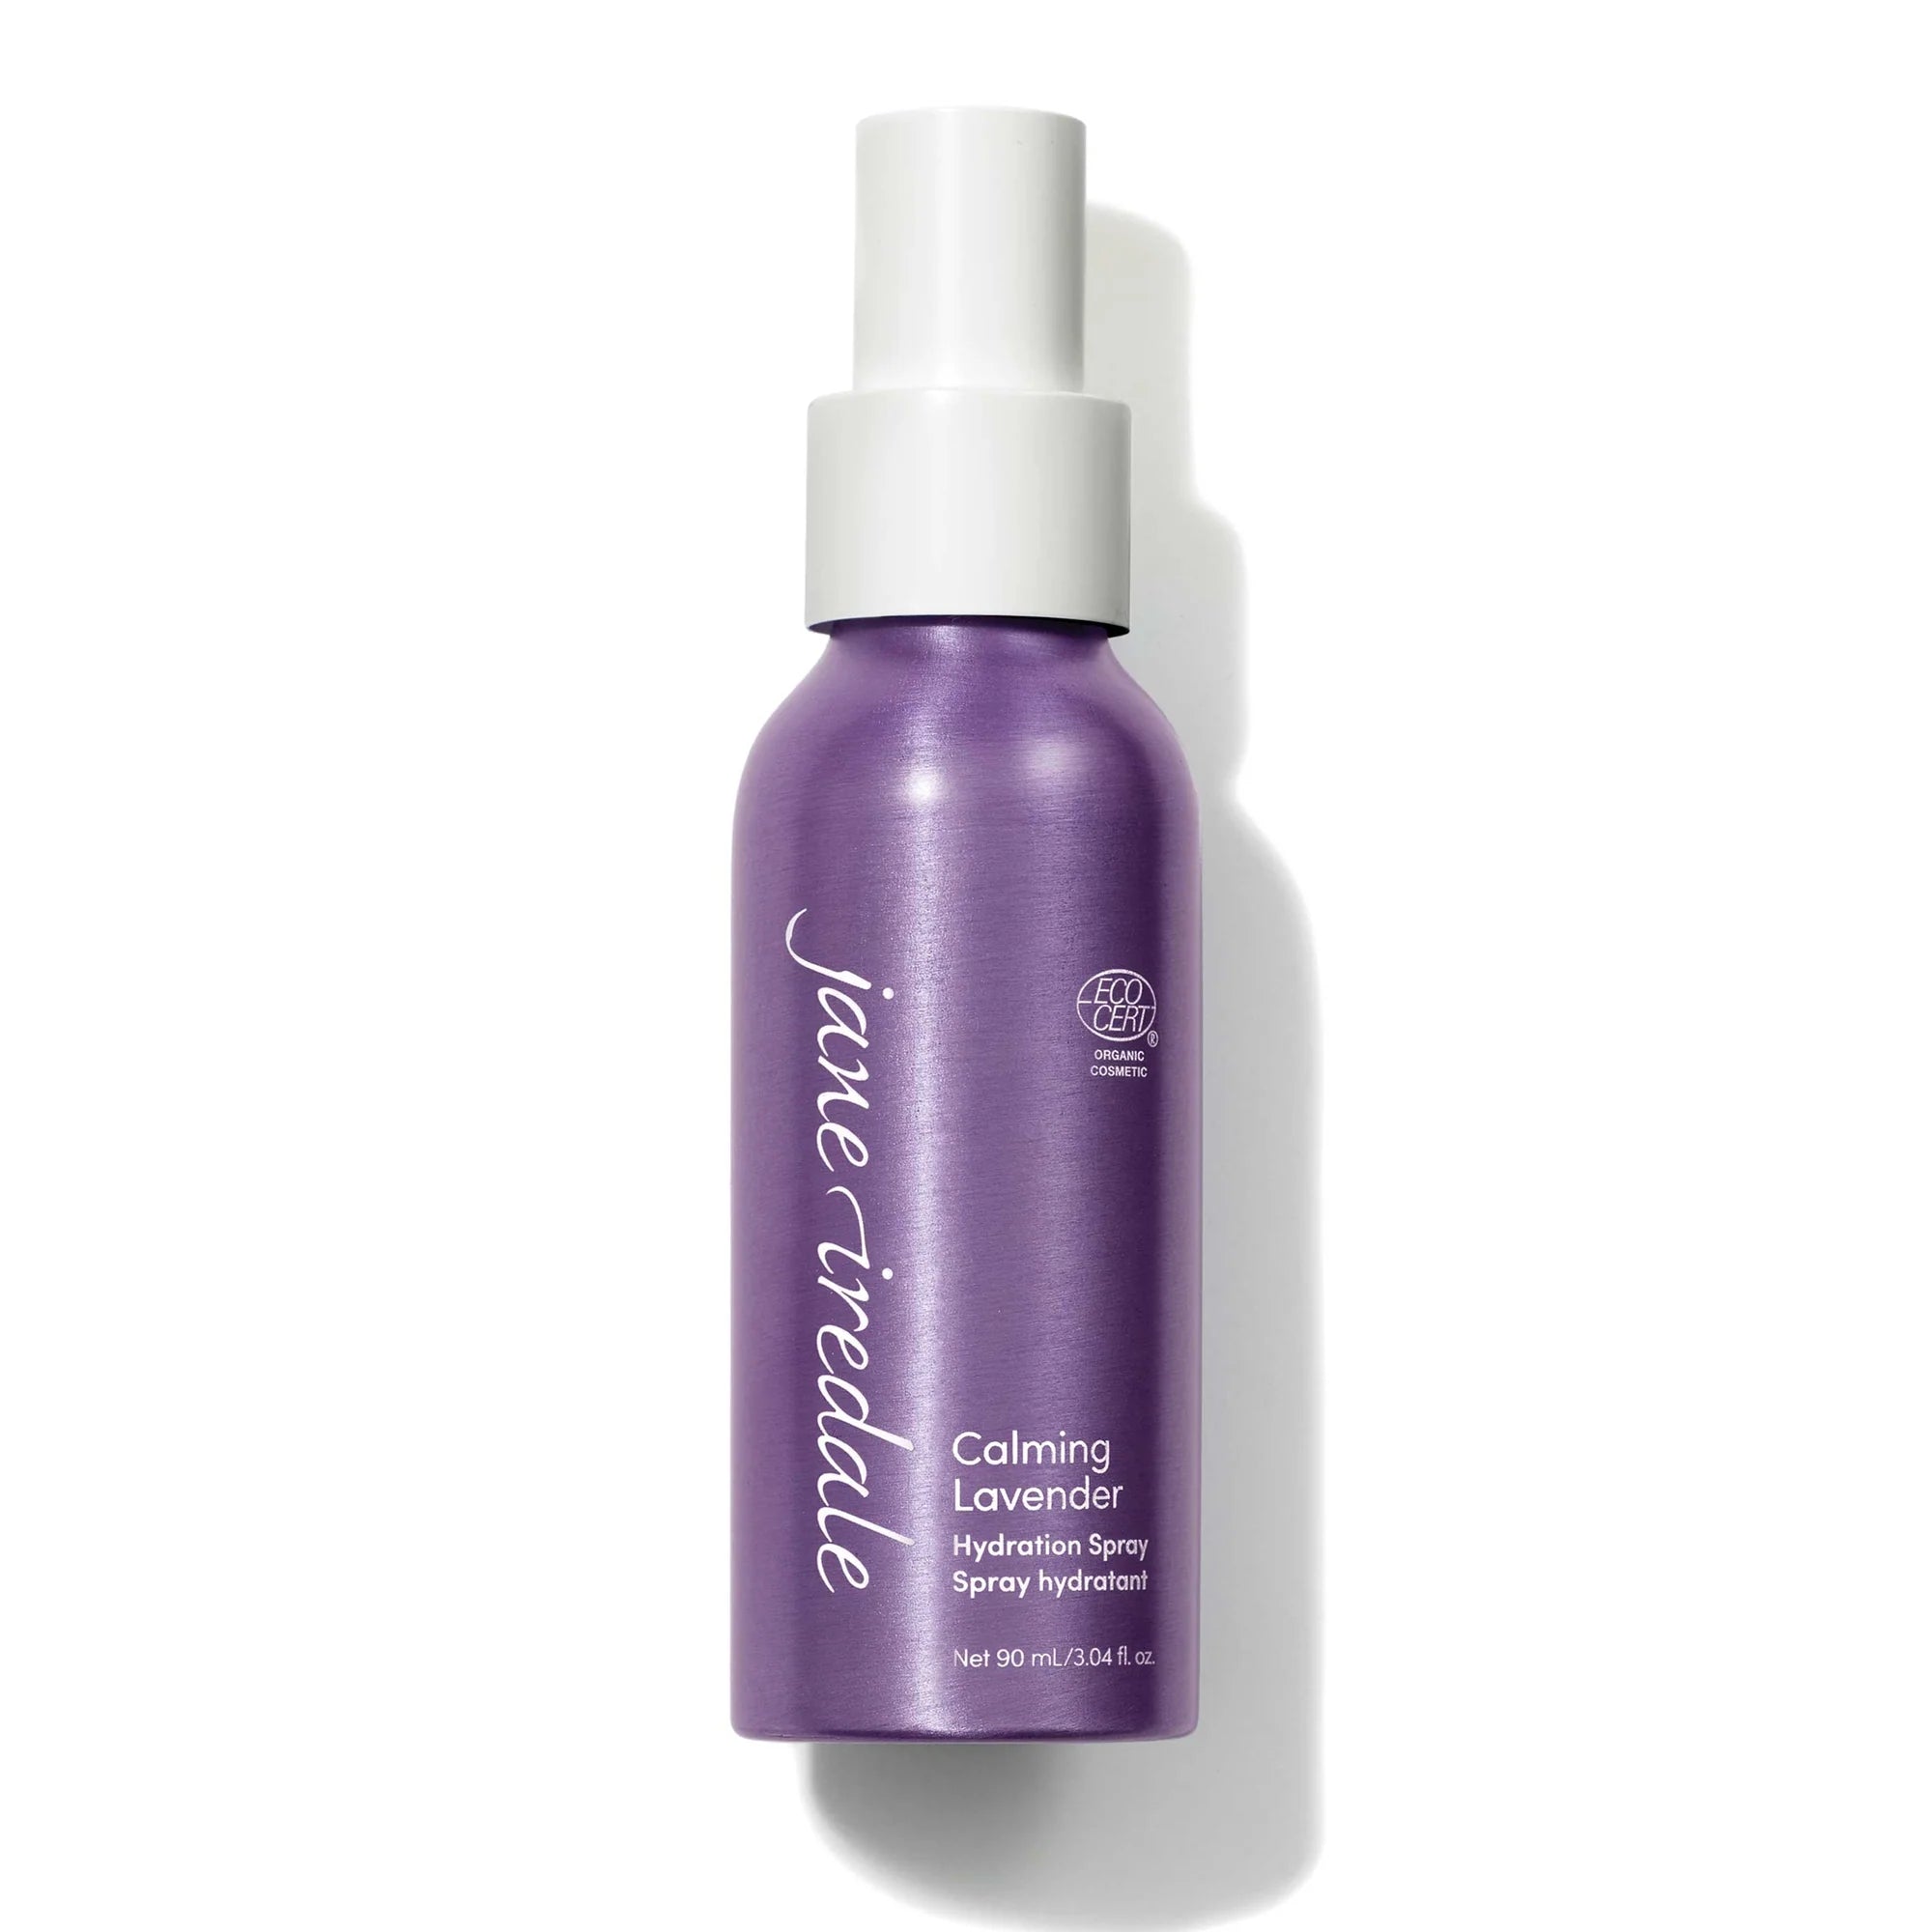 Jane Iredale Calming Lavender Hydration Spray Regular 90 mL